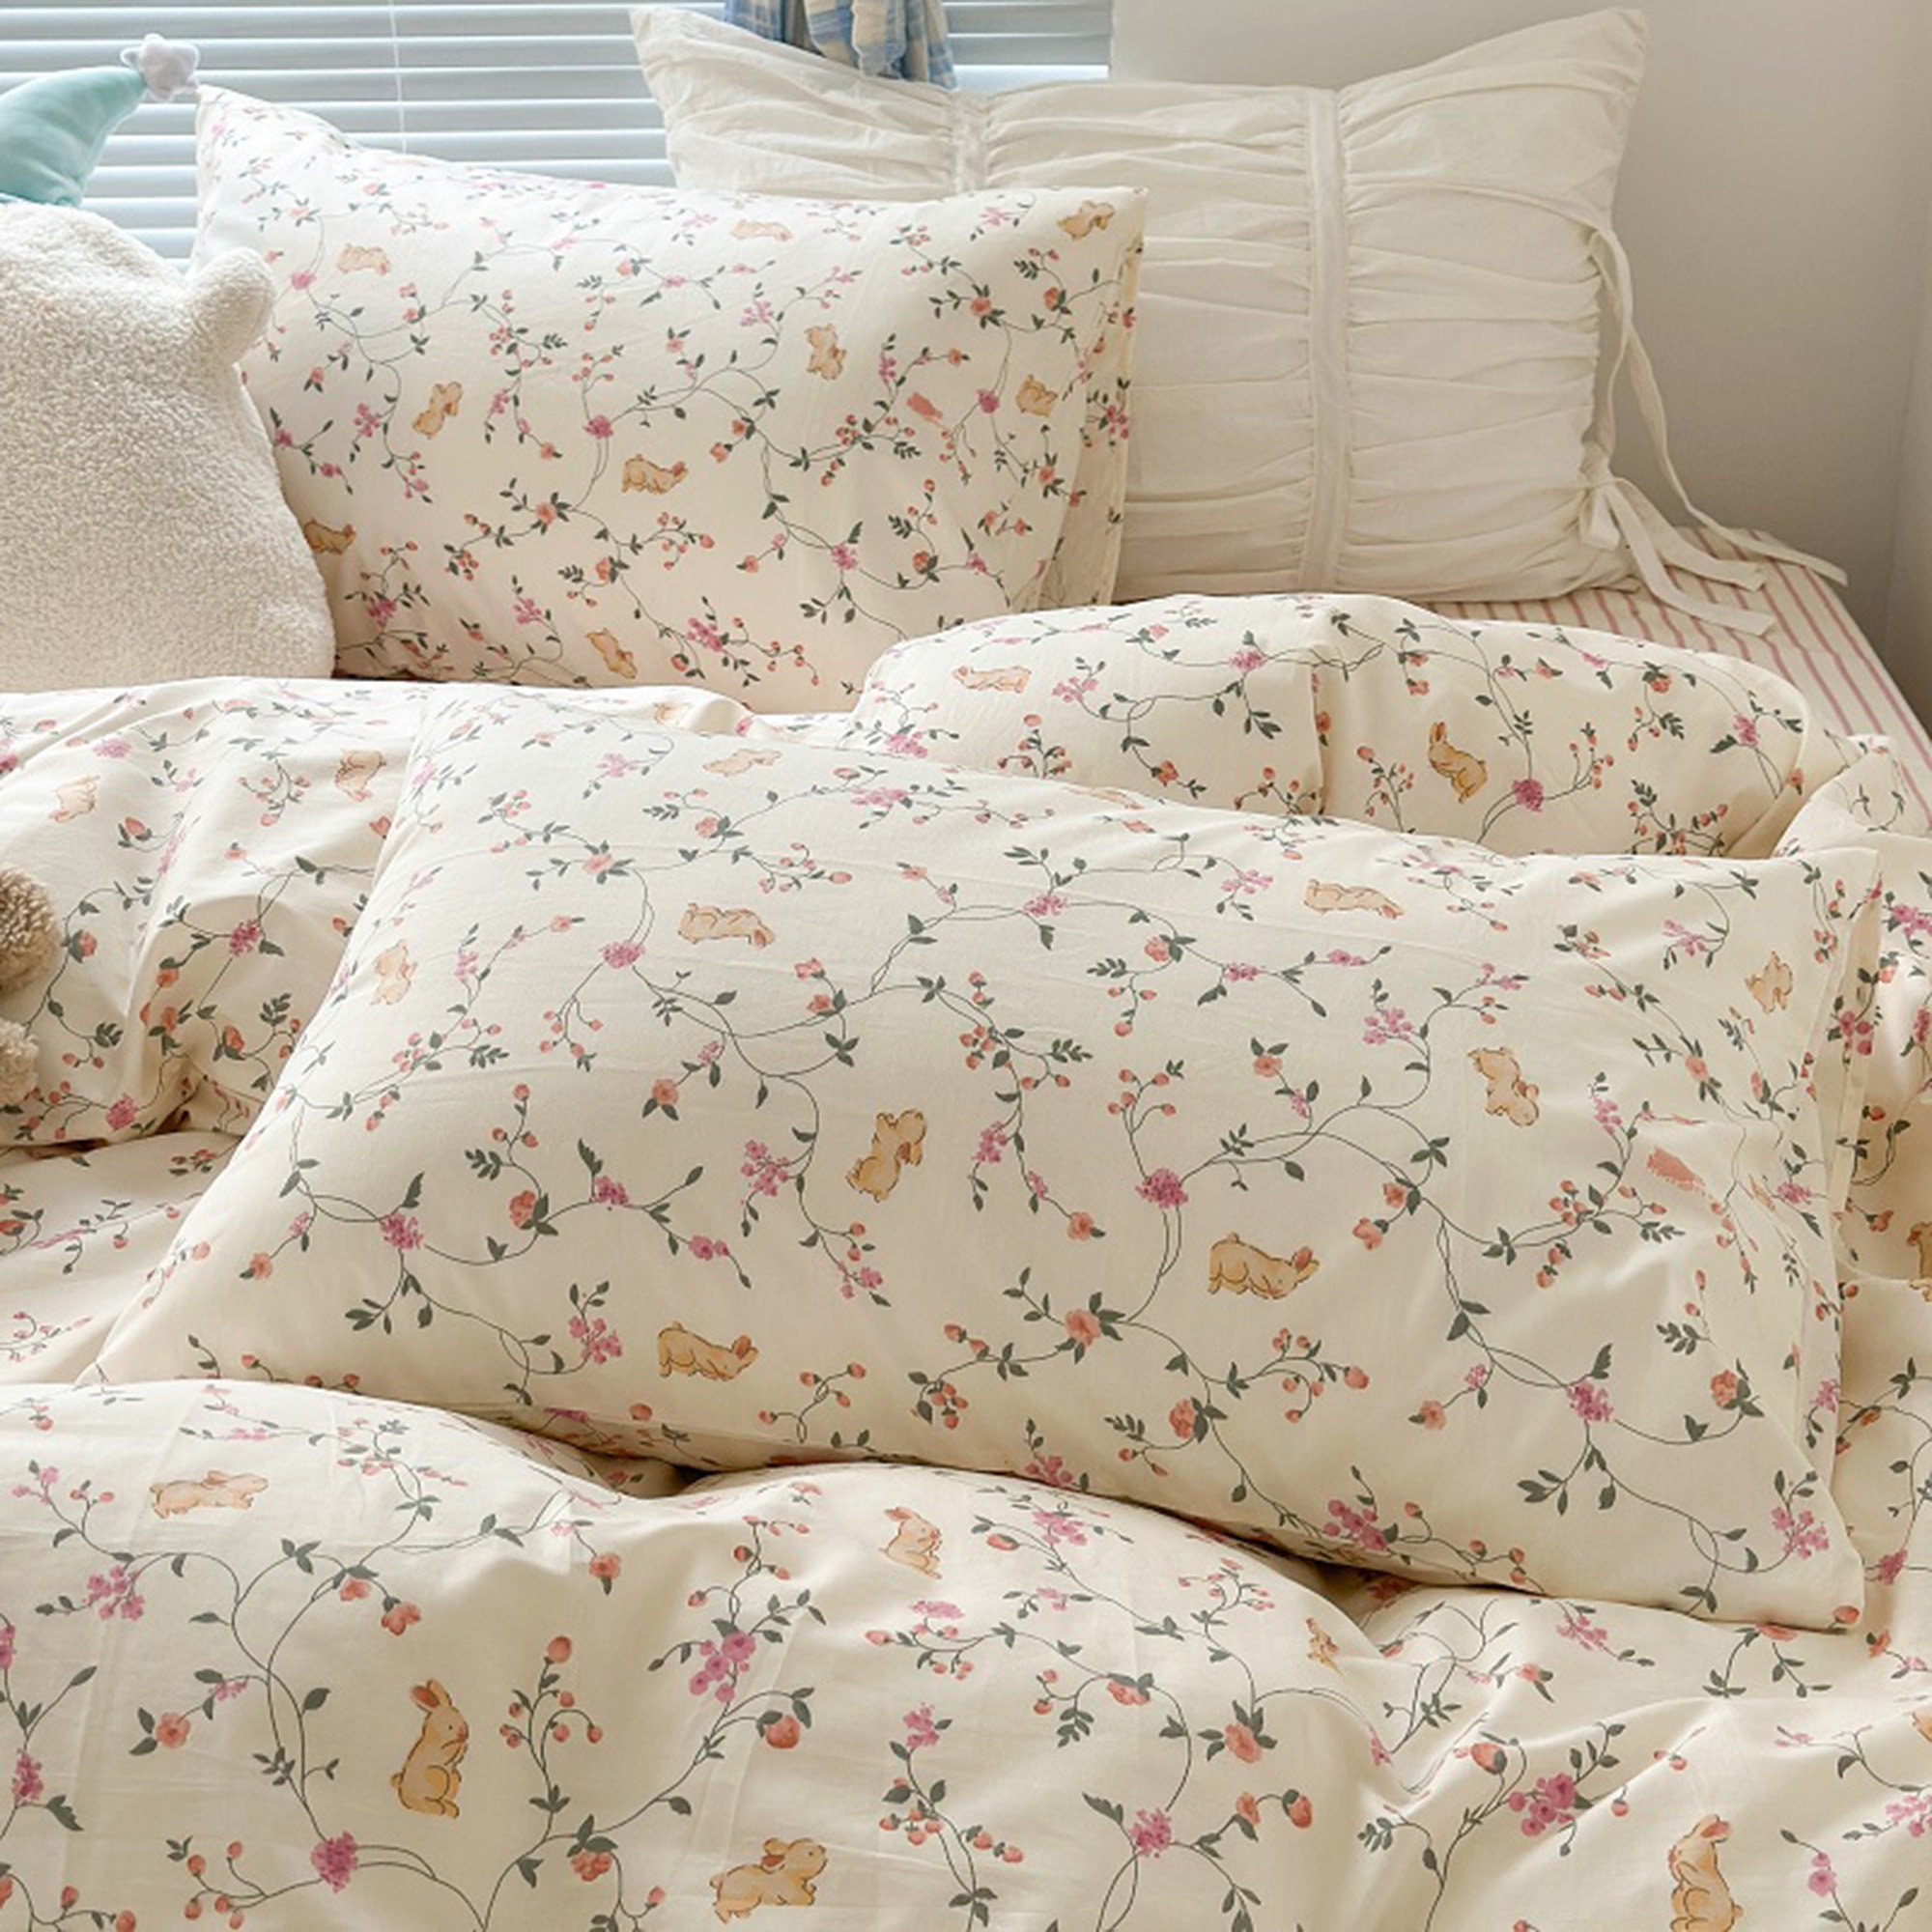 Retro Floral Rabbit Bedding, Pink Floral Bedding, Coquette Bedding ...